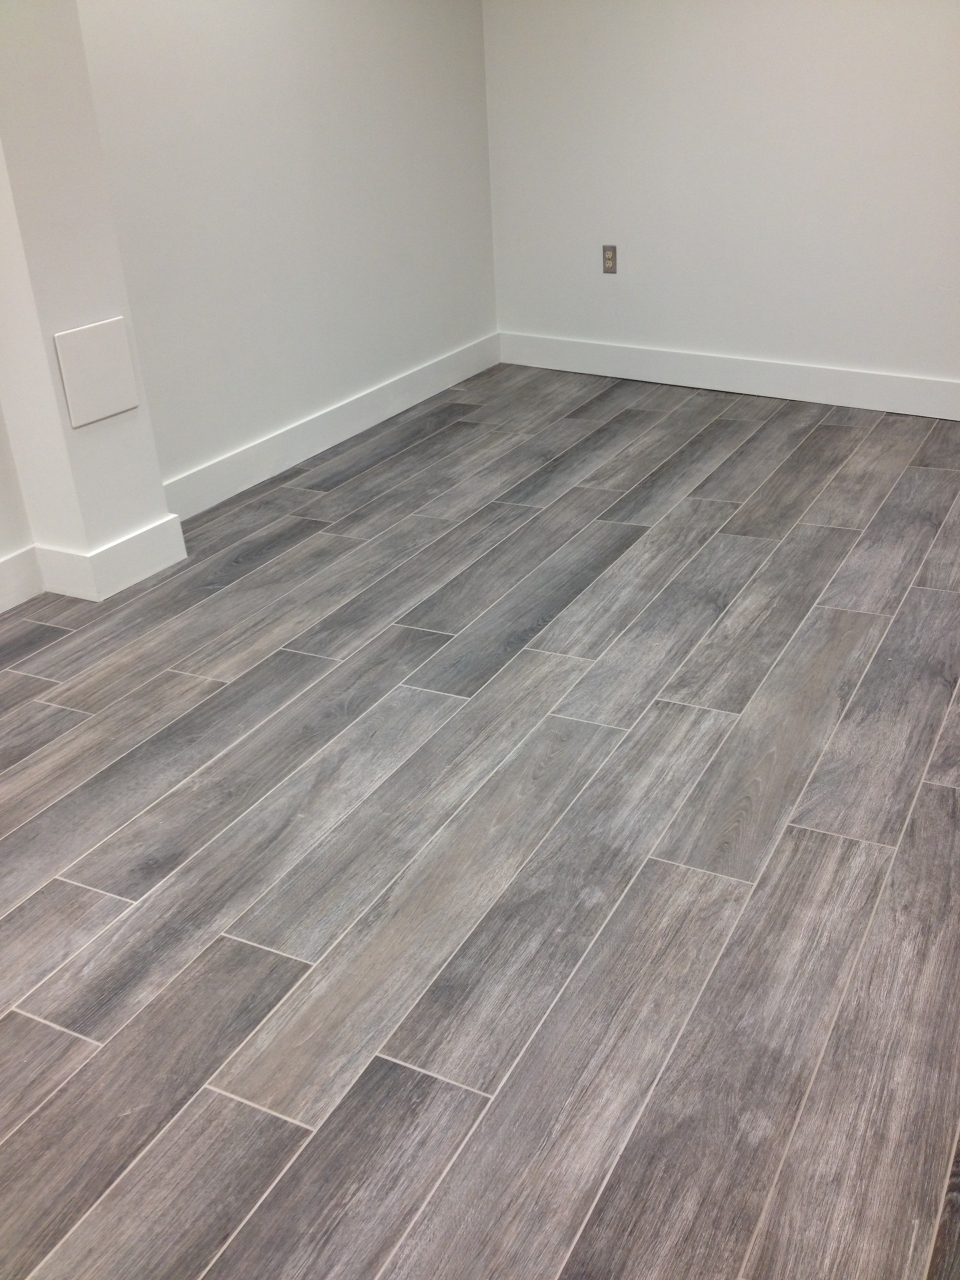 tile hardwood floor gray wood tile floor amazing tile ceramic tile wood floor transition CKZDPUA